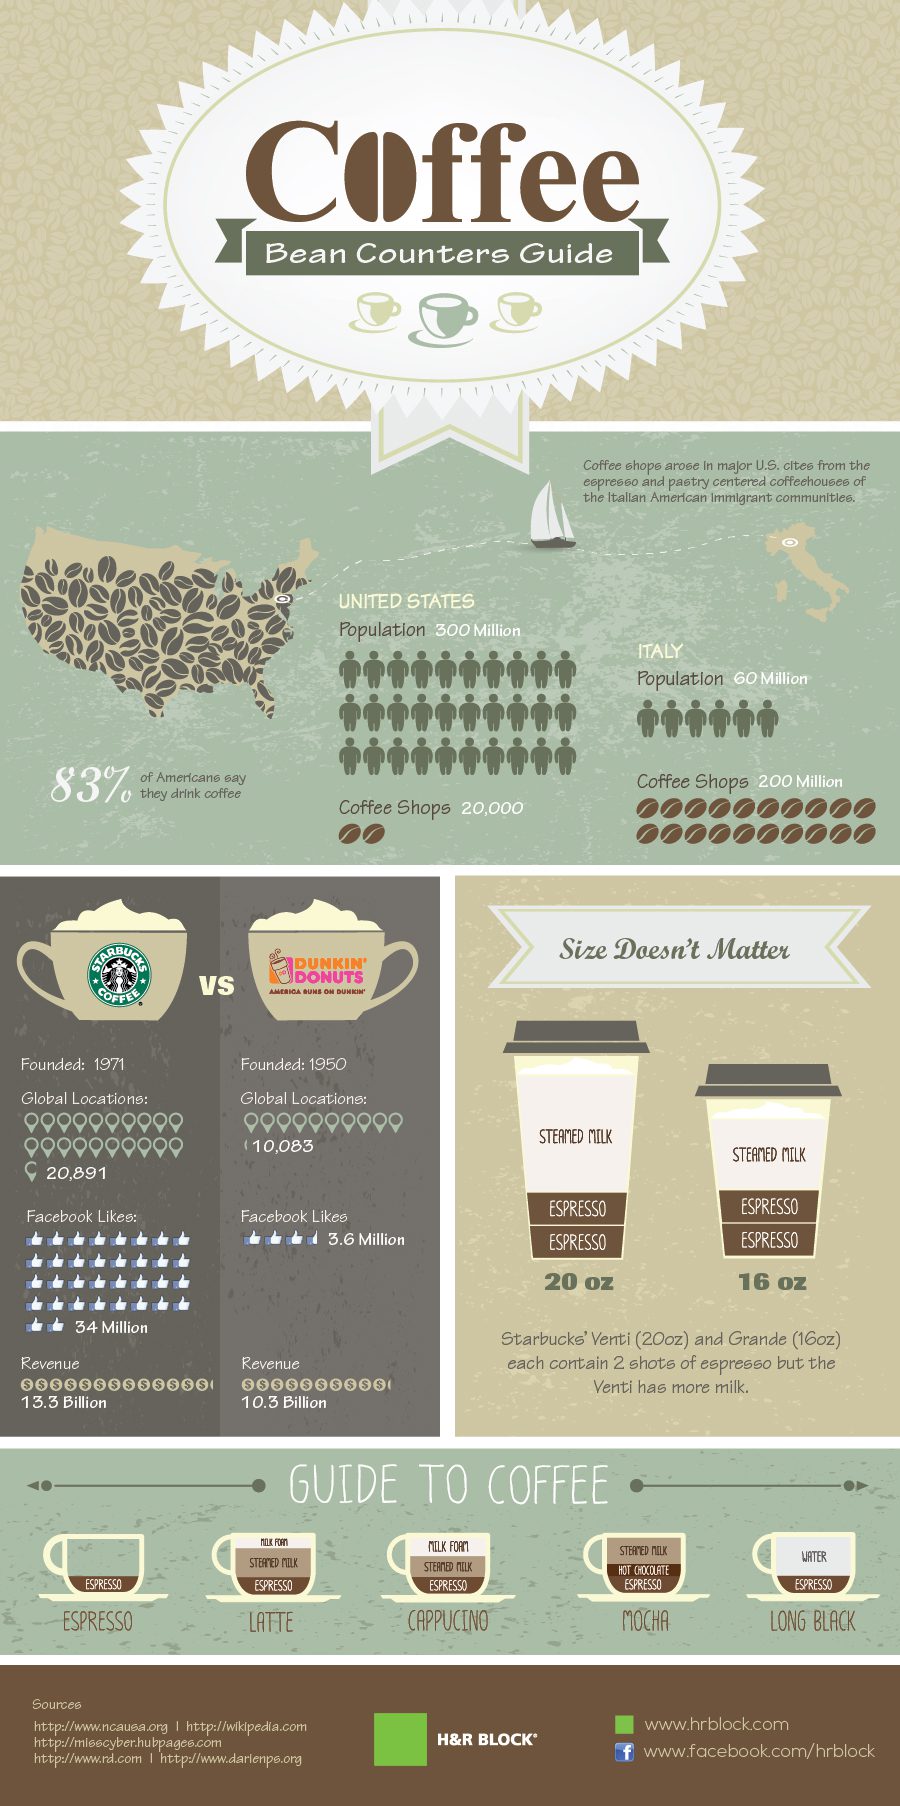 Coffee Habits in America